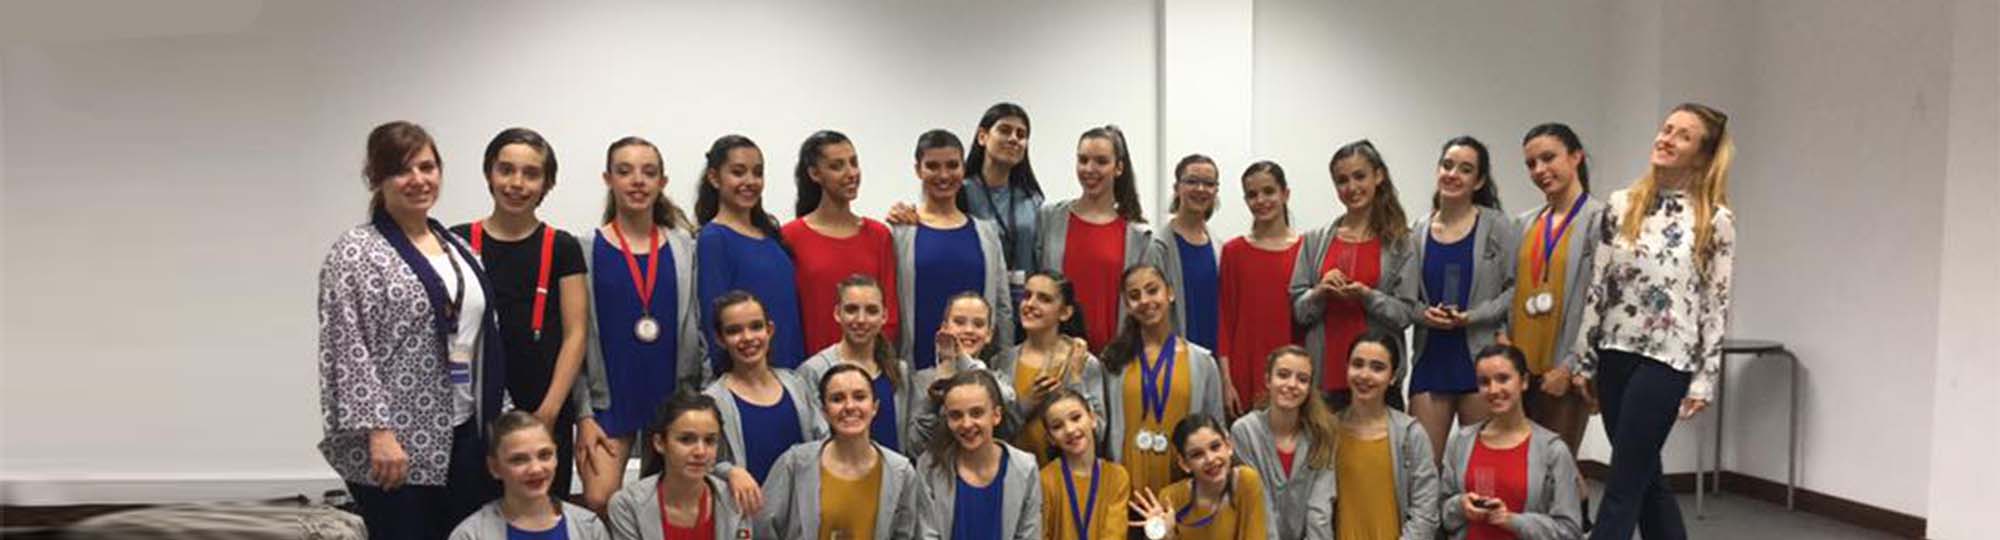 Leiria Dance Competition 2017
